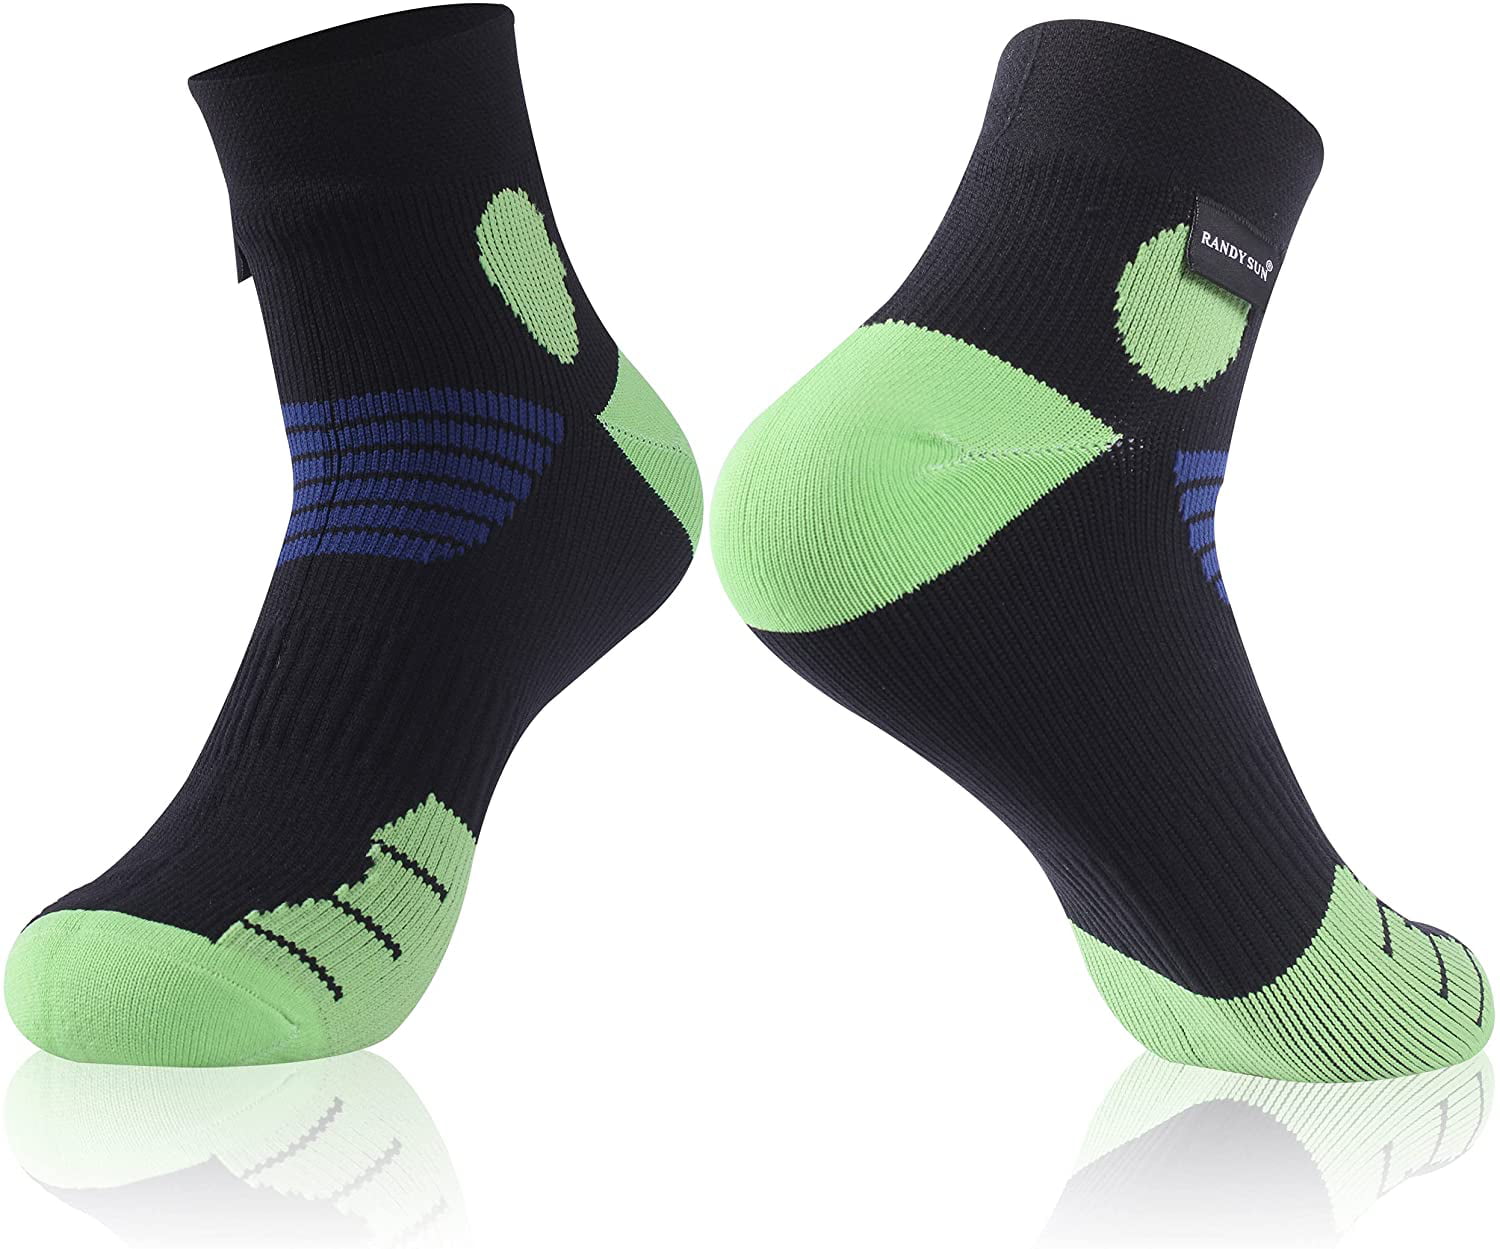 RANDY SUN Breathable Waterproof Socks Unisex Cycling/Hunting/Fishing/Running Ankle/Mid Calf Socks 